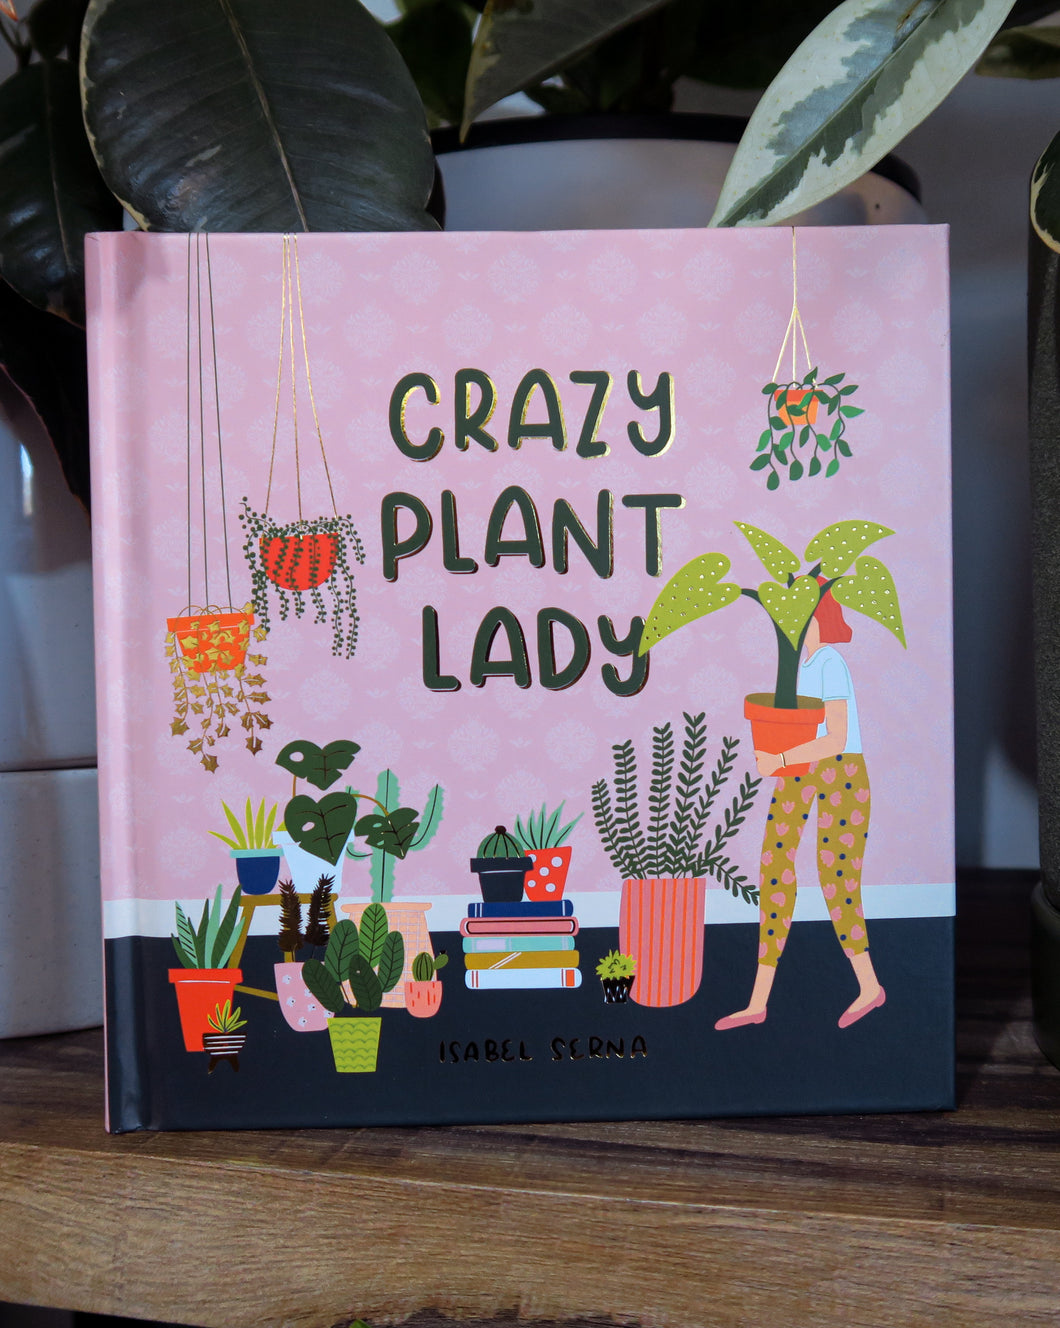 Crazy Plant Lady by Isabel Serna